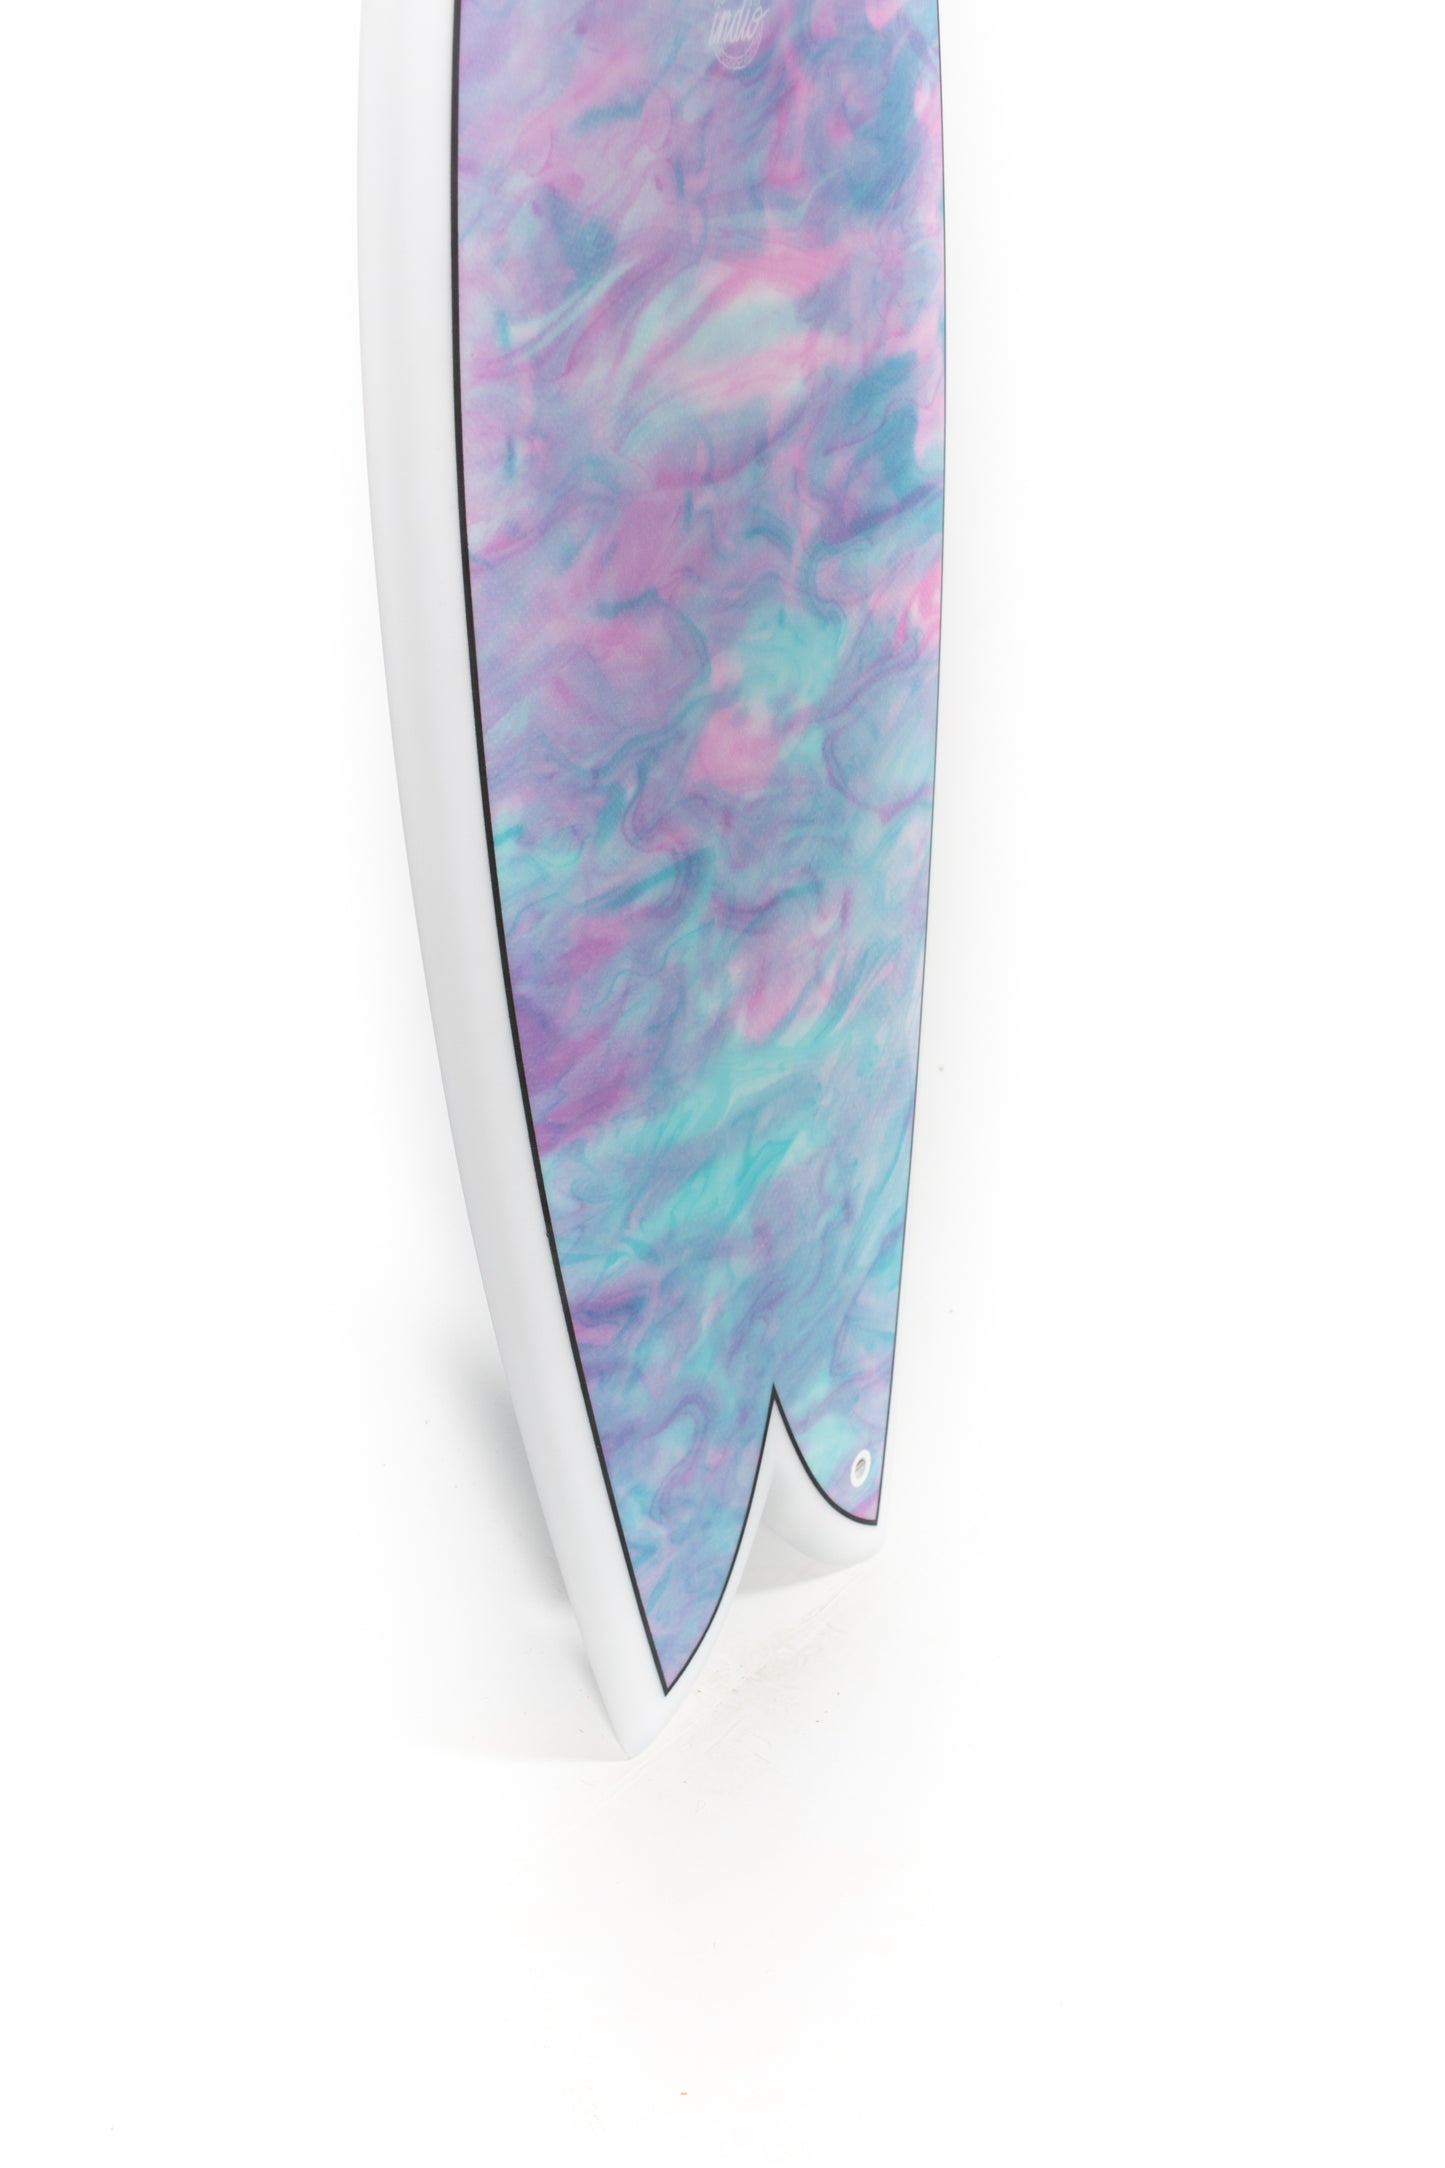 
                  
                    Pukas Surf Shop - Indio Surfboards - DAB Swirl Effect Blue Purple - 5’9” x 21 1/8 x 2 9/16 x 37.6L.
                  
                